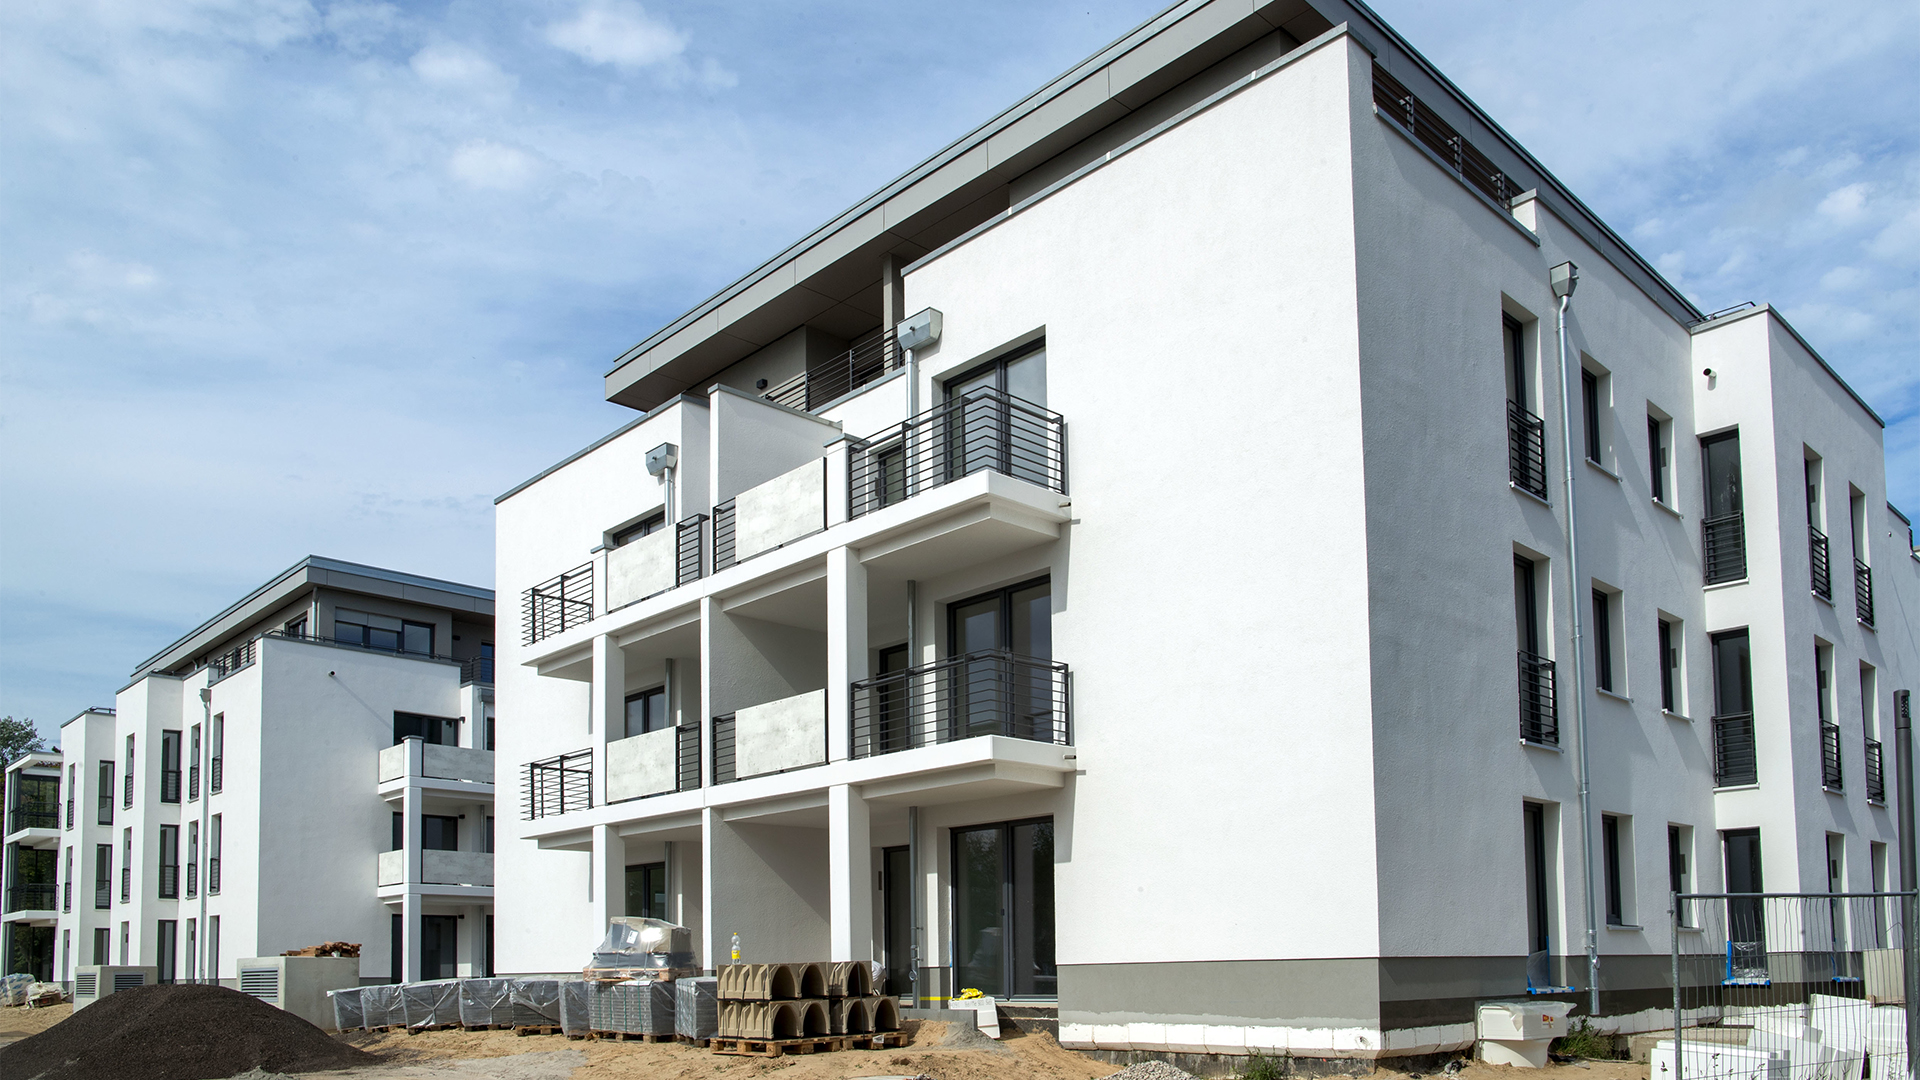 Neue Wohnhäuser in Rostock-Warnemünde | picture alliance / Jens Büttner